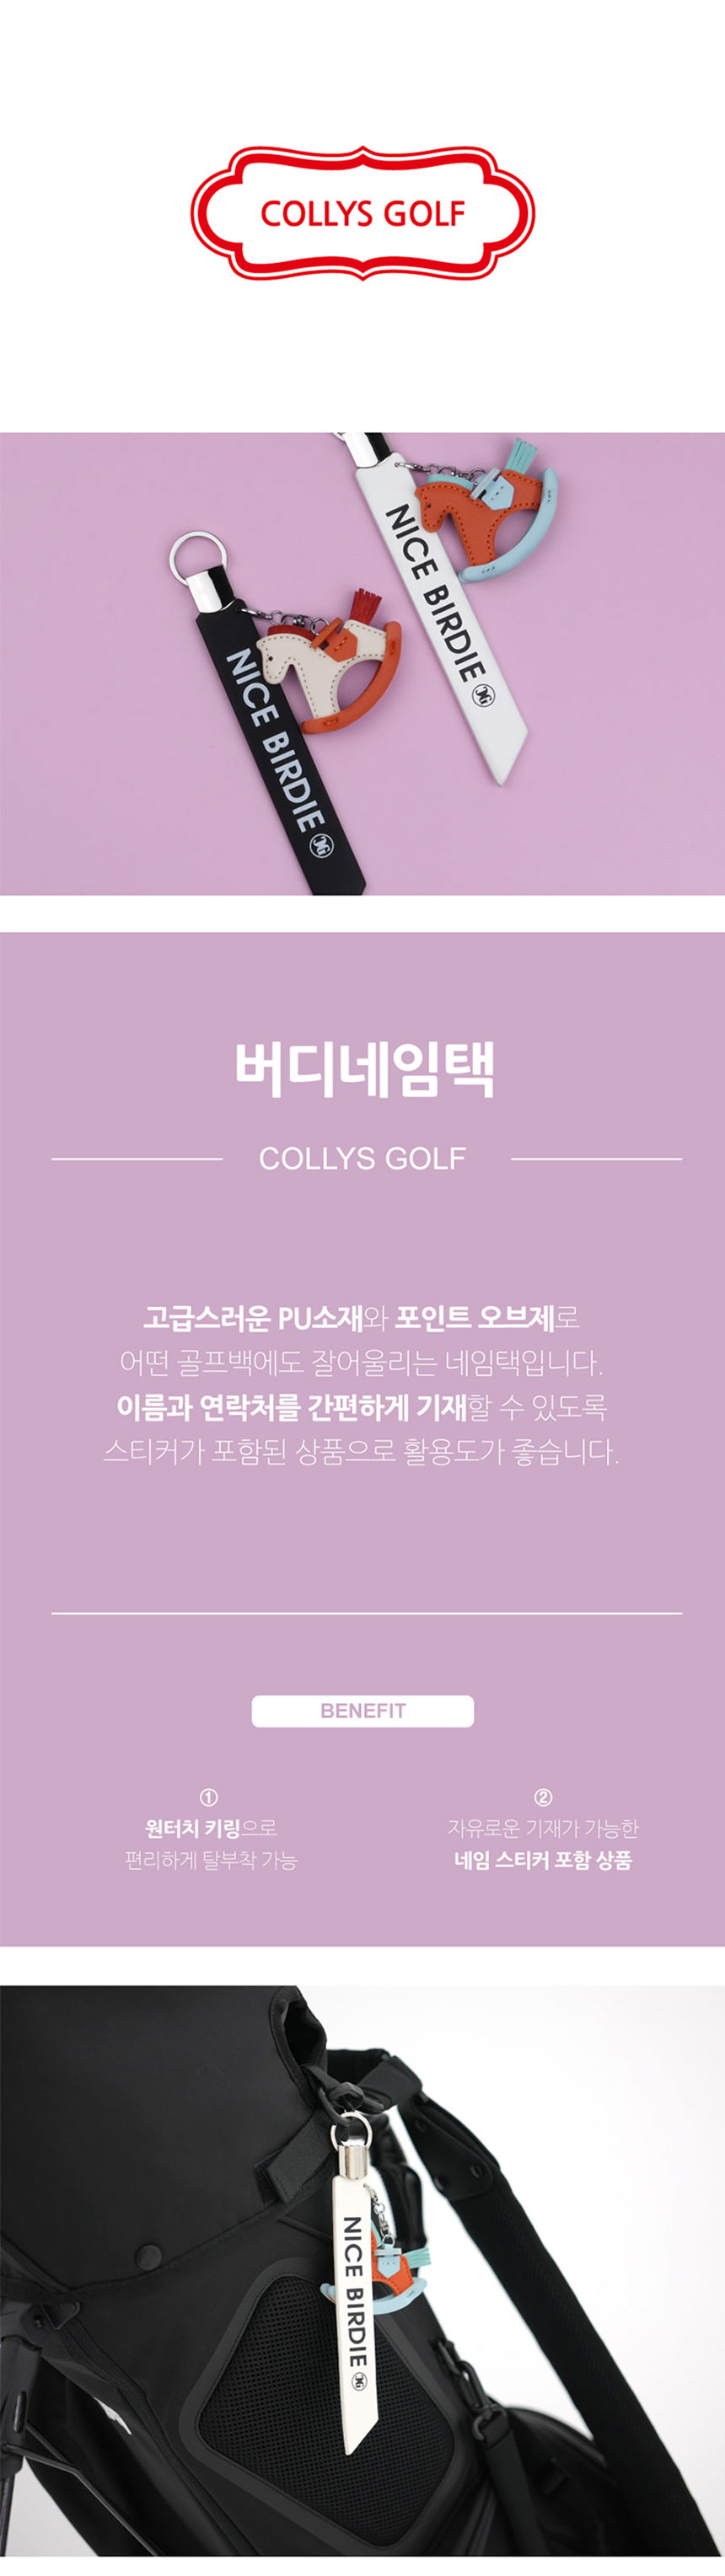 collys-golf-name-tag_01_162519.jpg